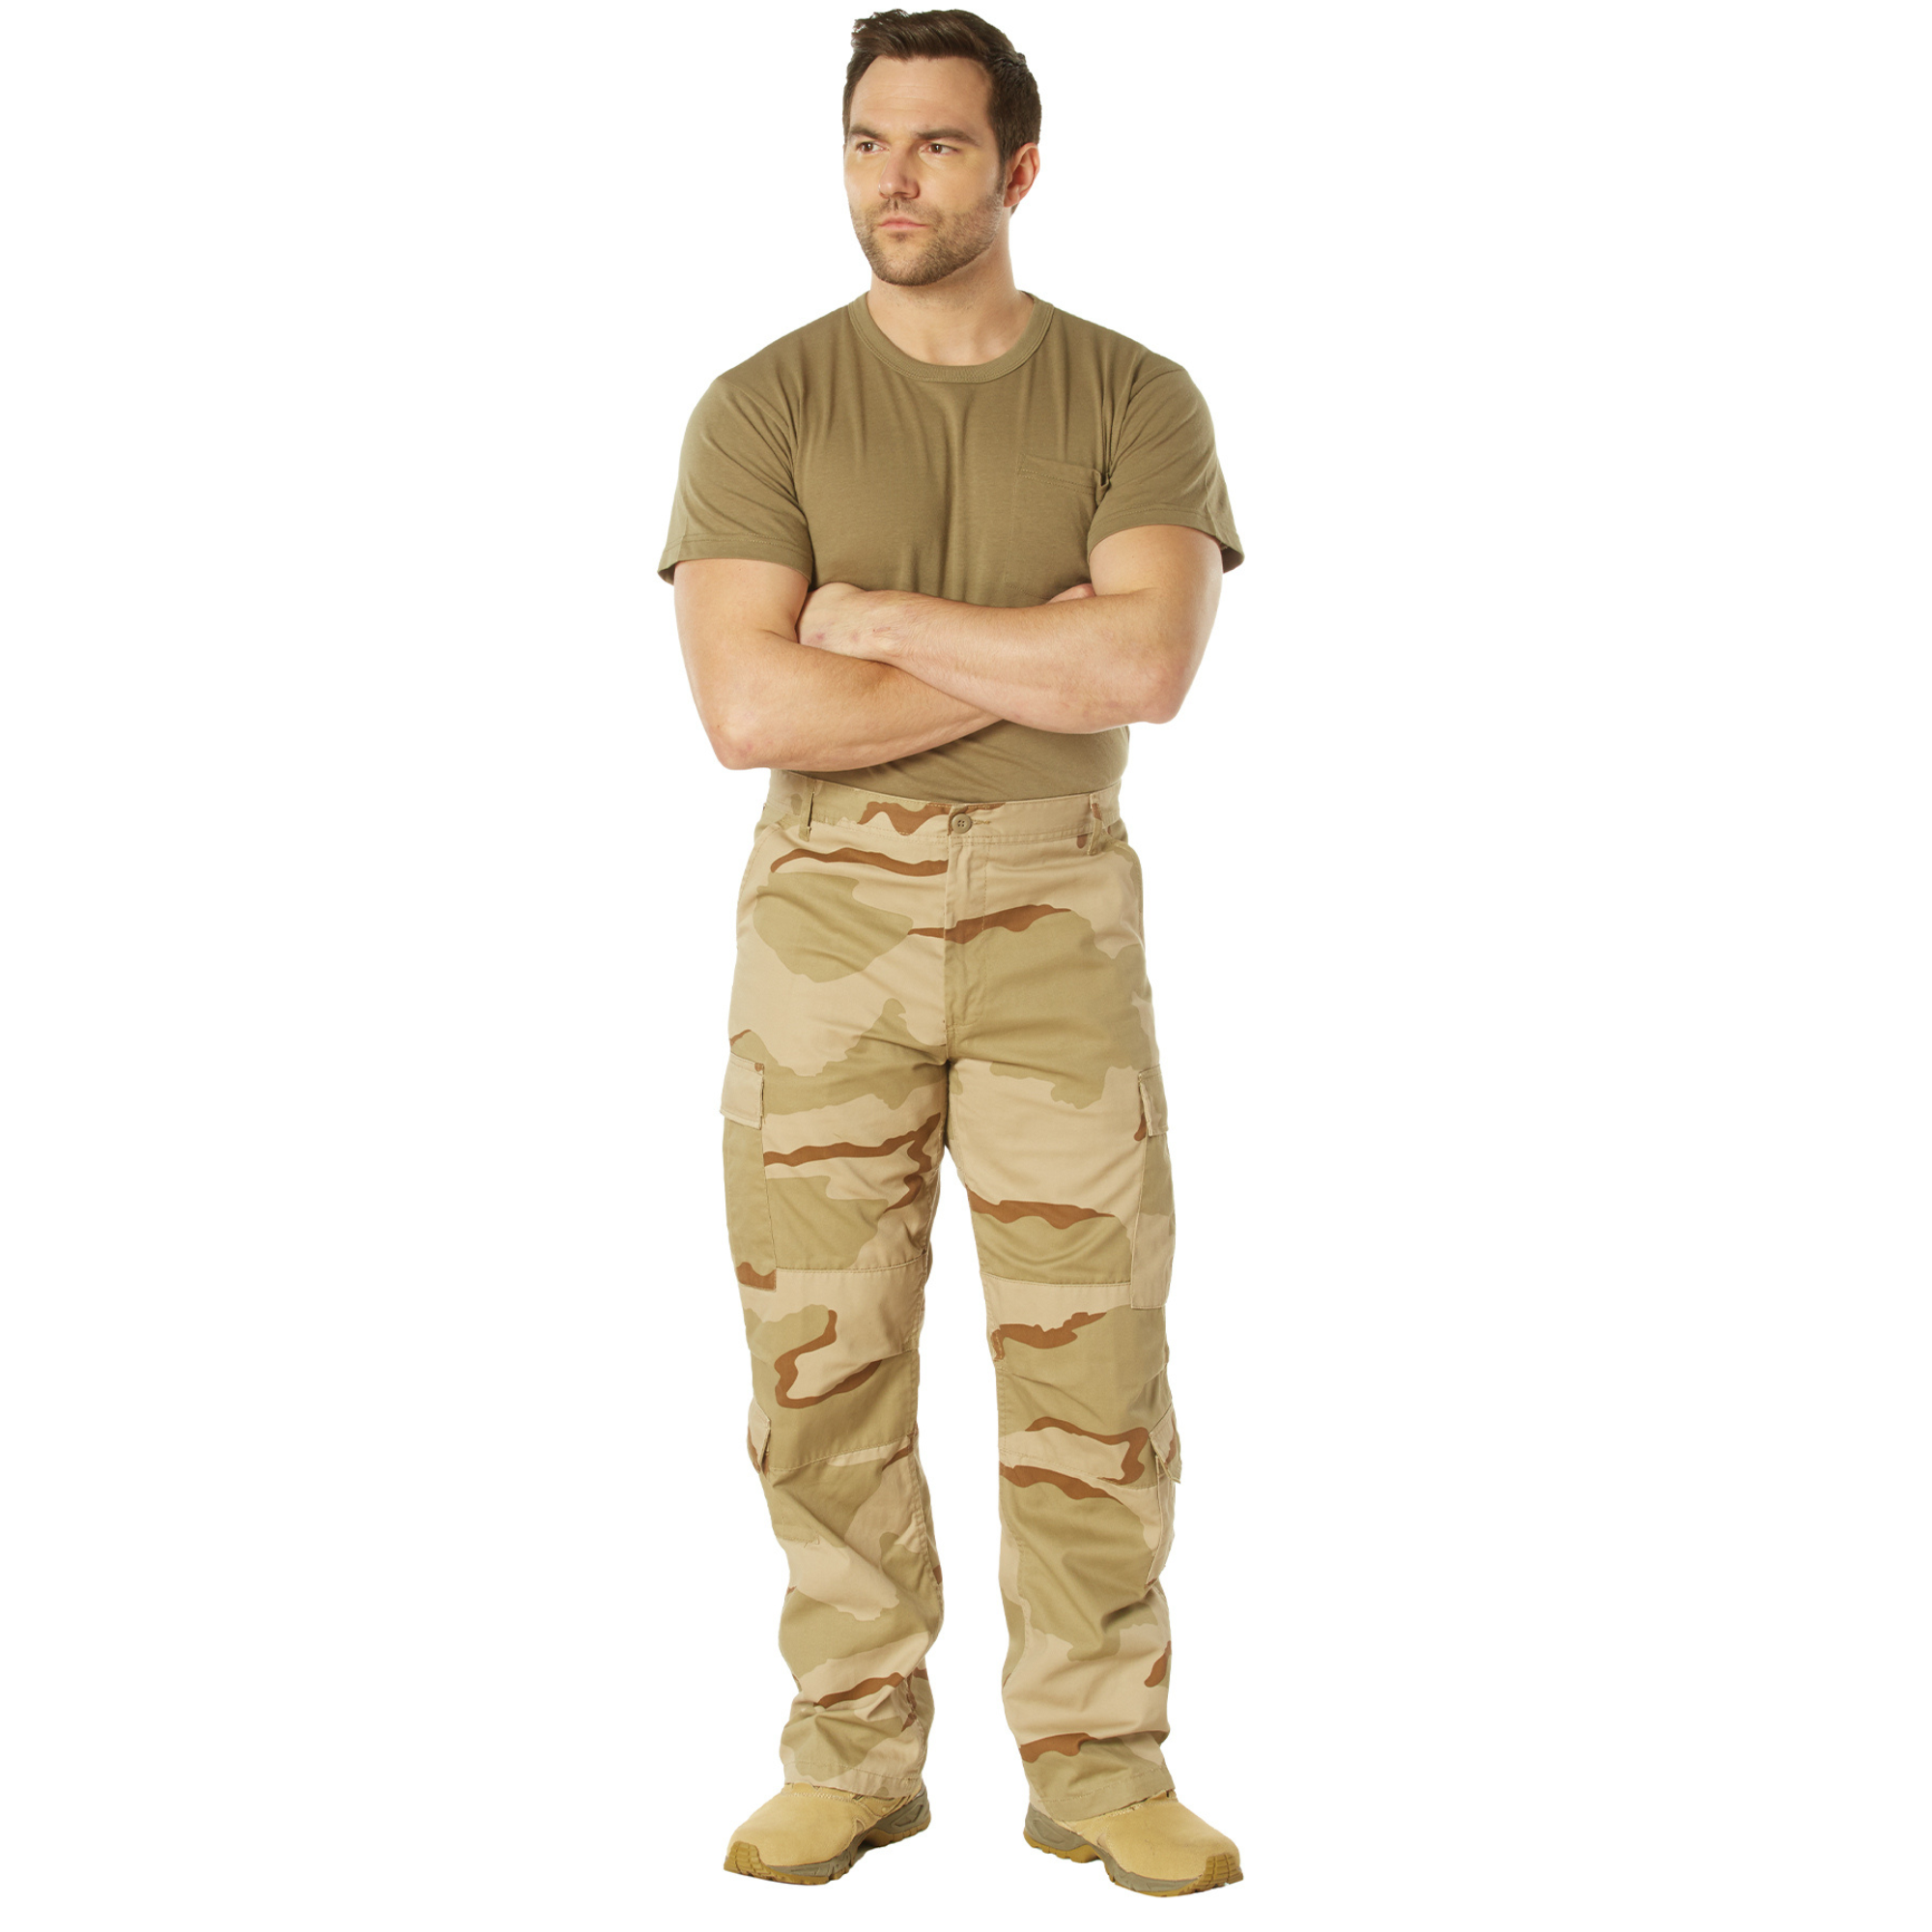 Shop 6-Color Desert Camo BDU Pants - Fatigues Army Navy Gear